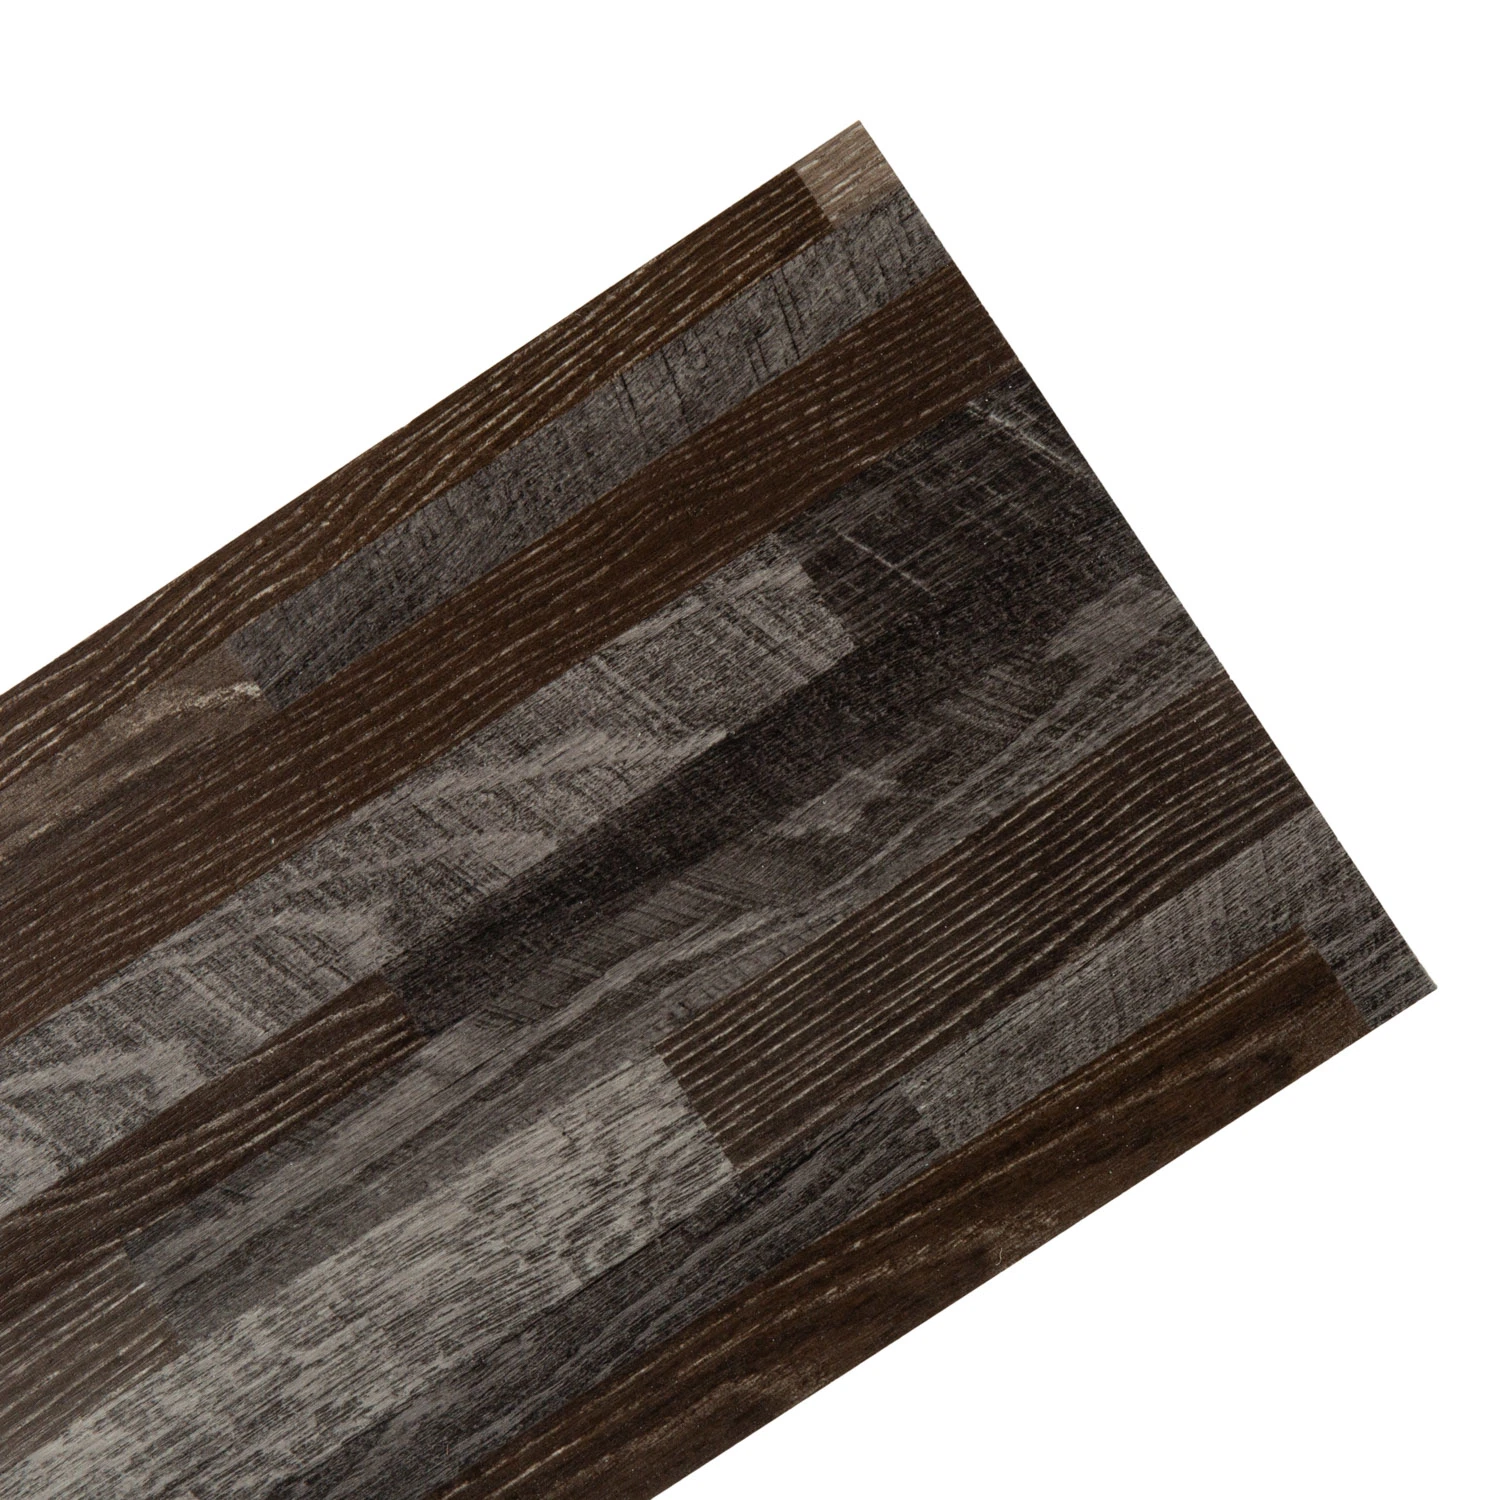 Wear-Resistant Spc Floor/Vinyl Floor/Building Material with High Quality